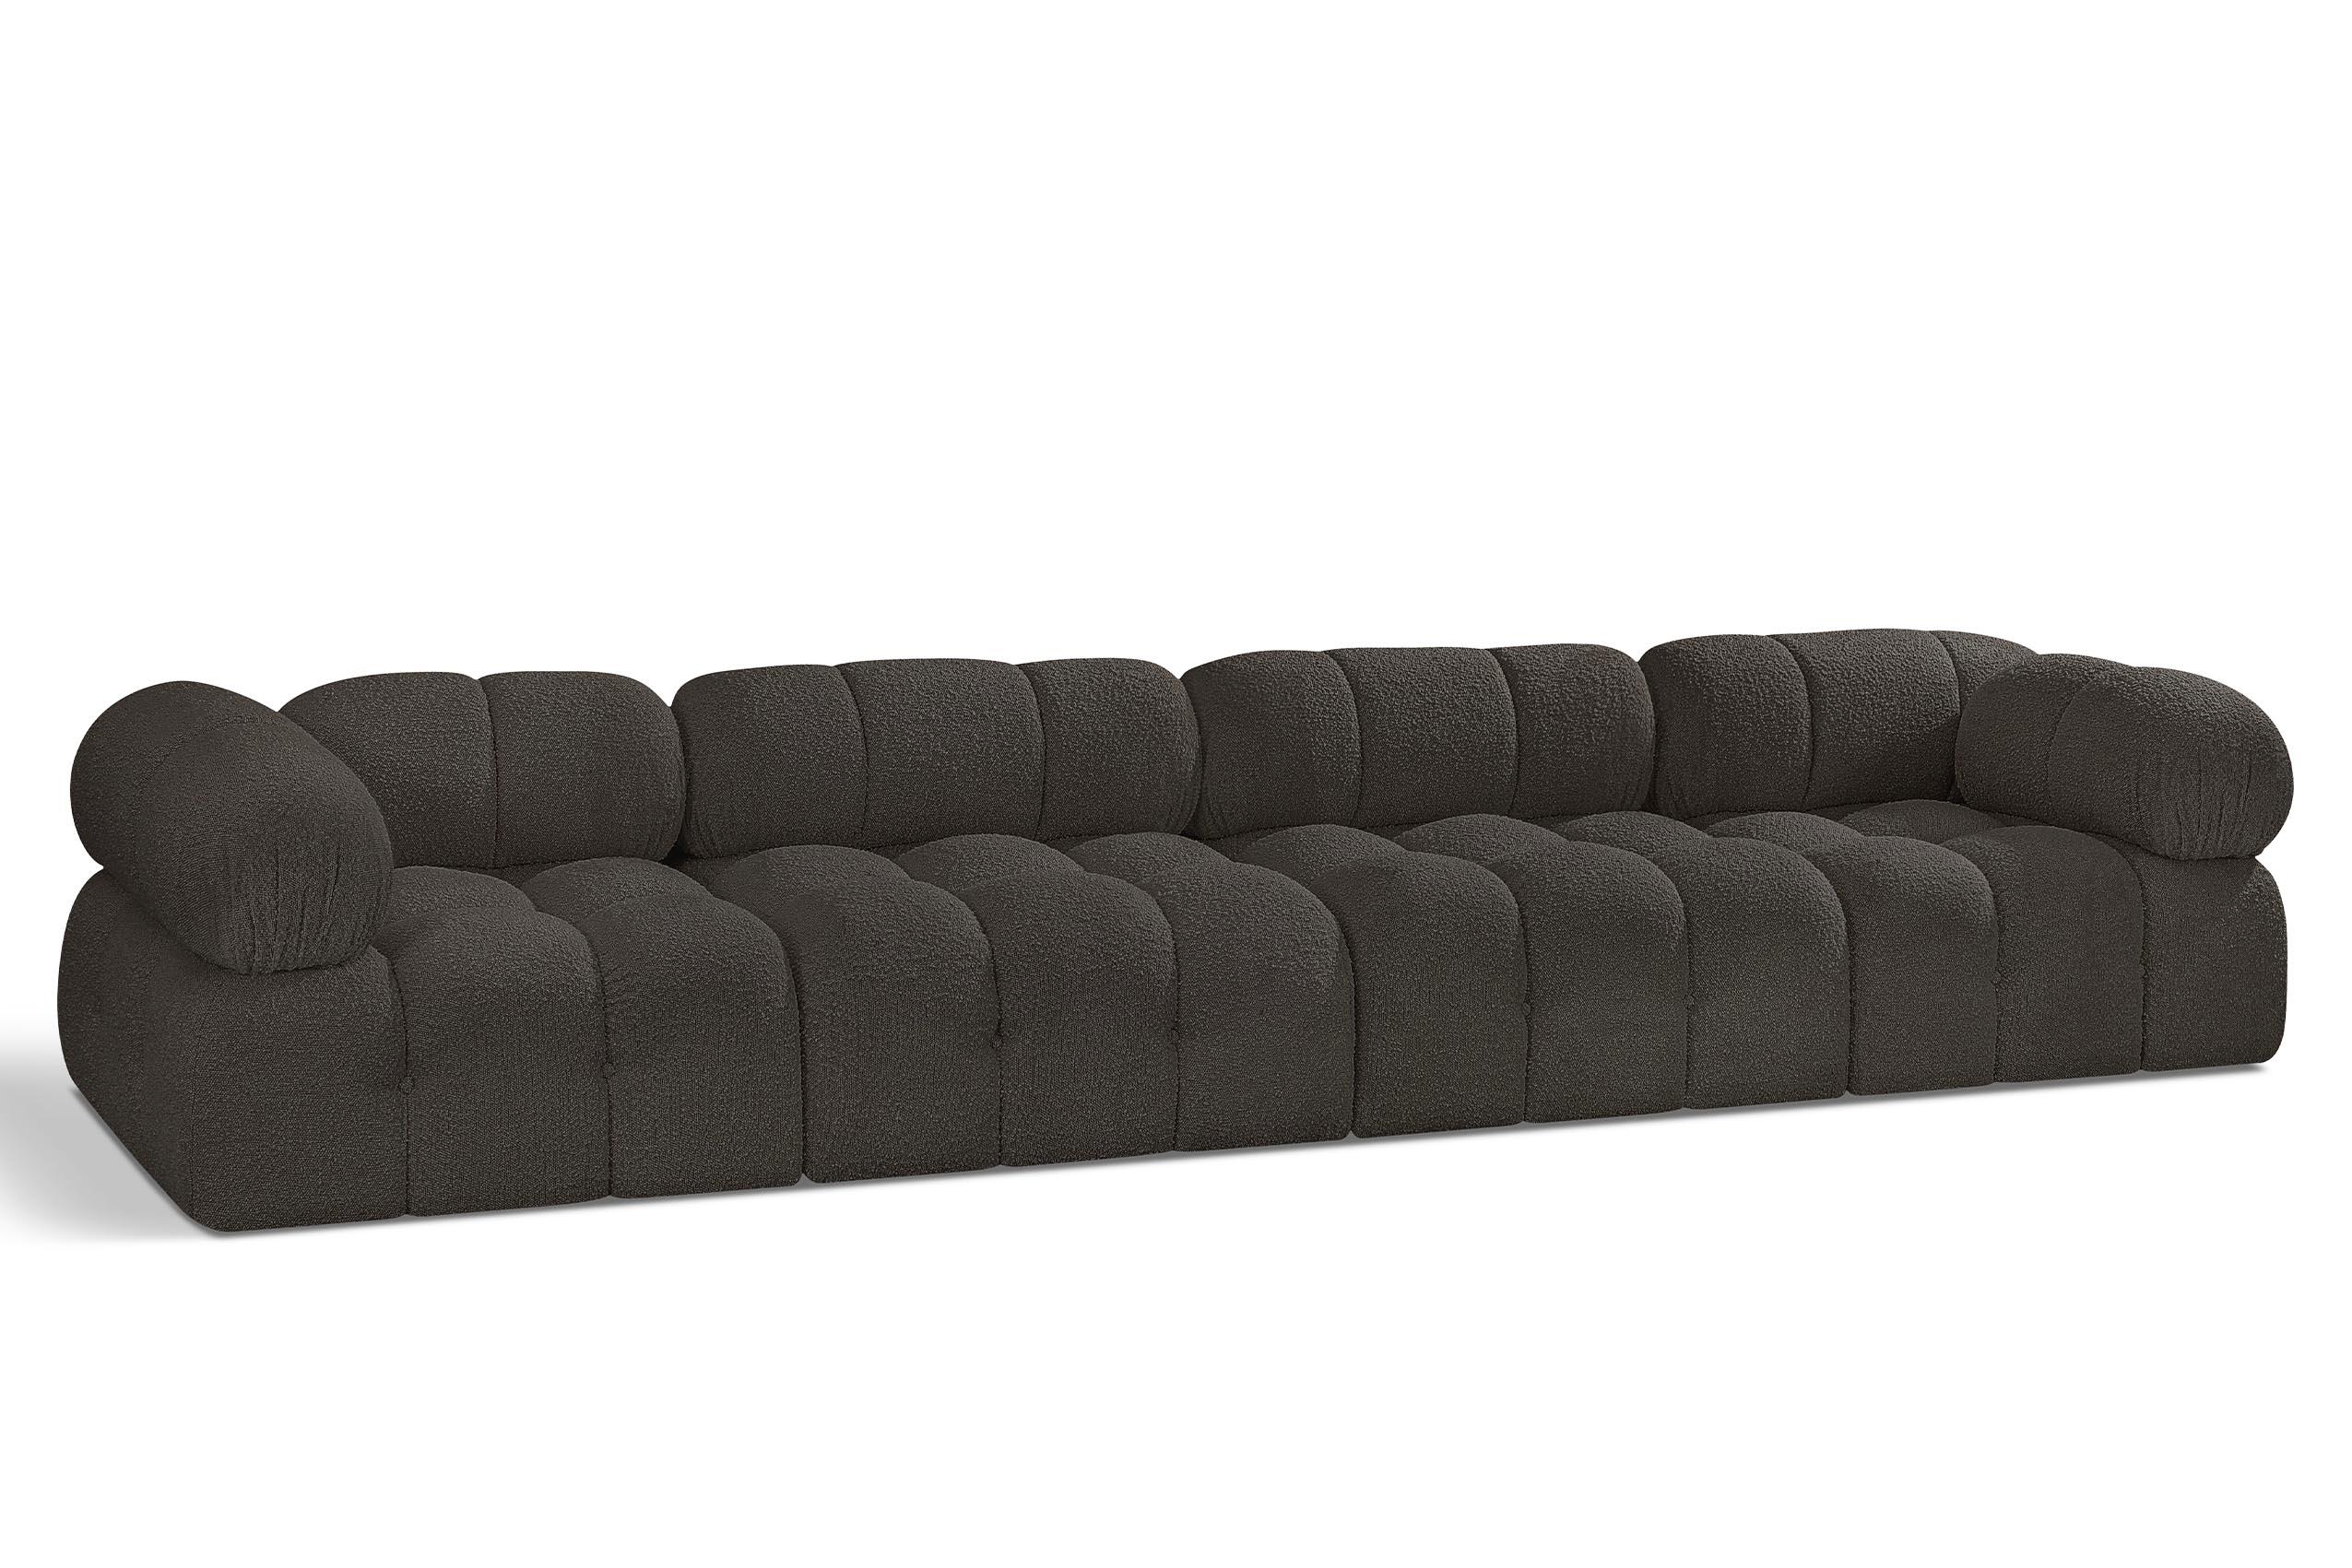 Contemporary, Modern Modular Sofa AMES 611Brown-S136A 611Brown-S136A in Brown 